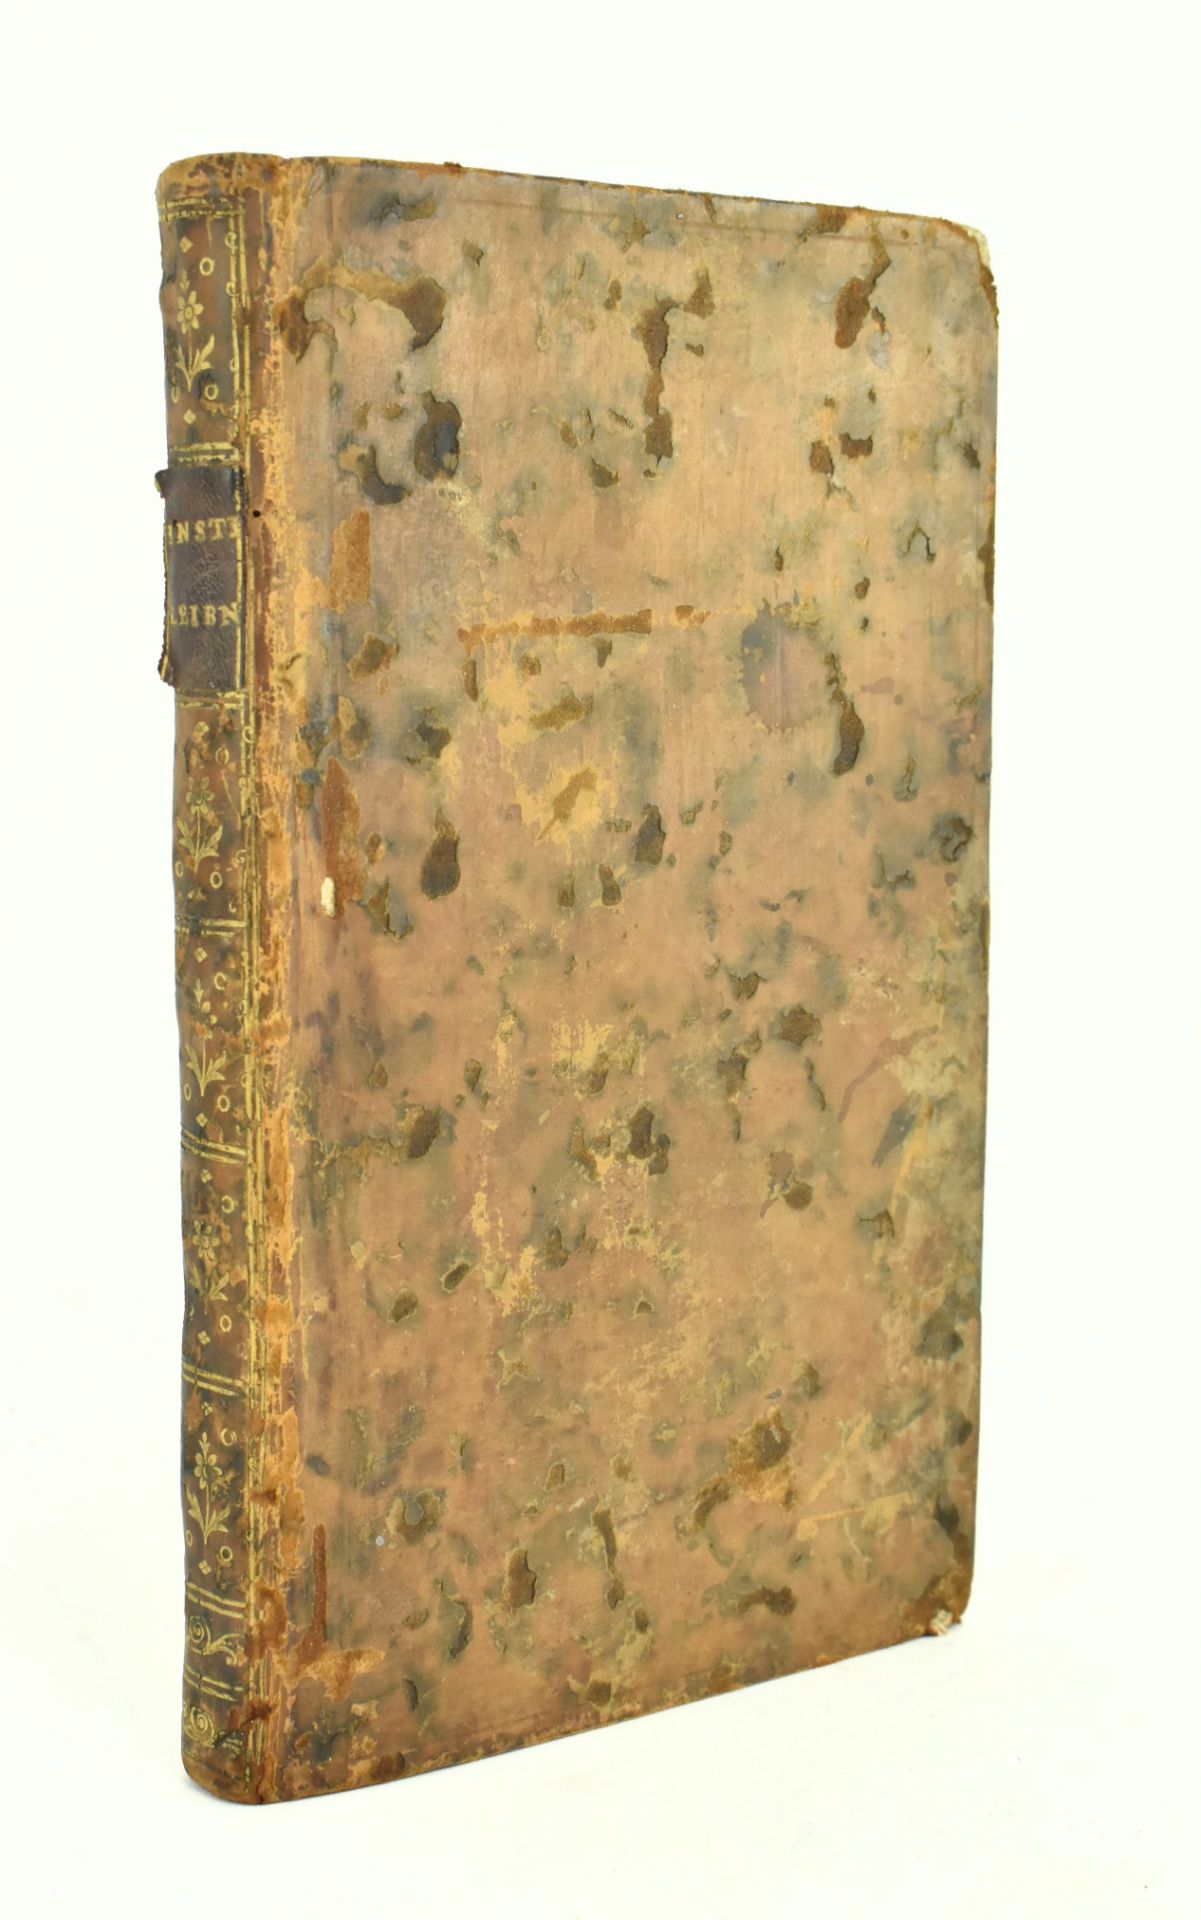 LEIBNIZ'S MONADOLOGY. 1767 FRENCH EDITION IN CONTEMP. CALF